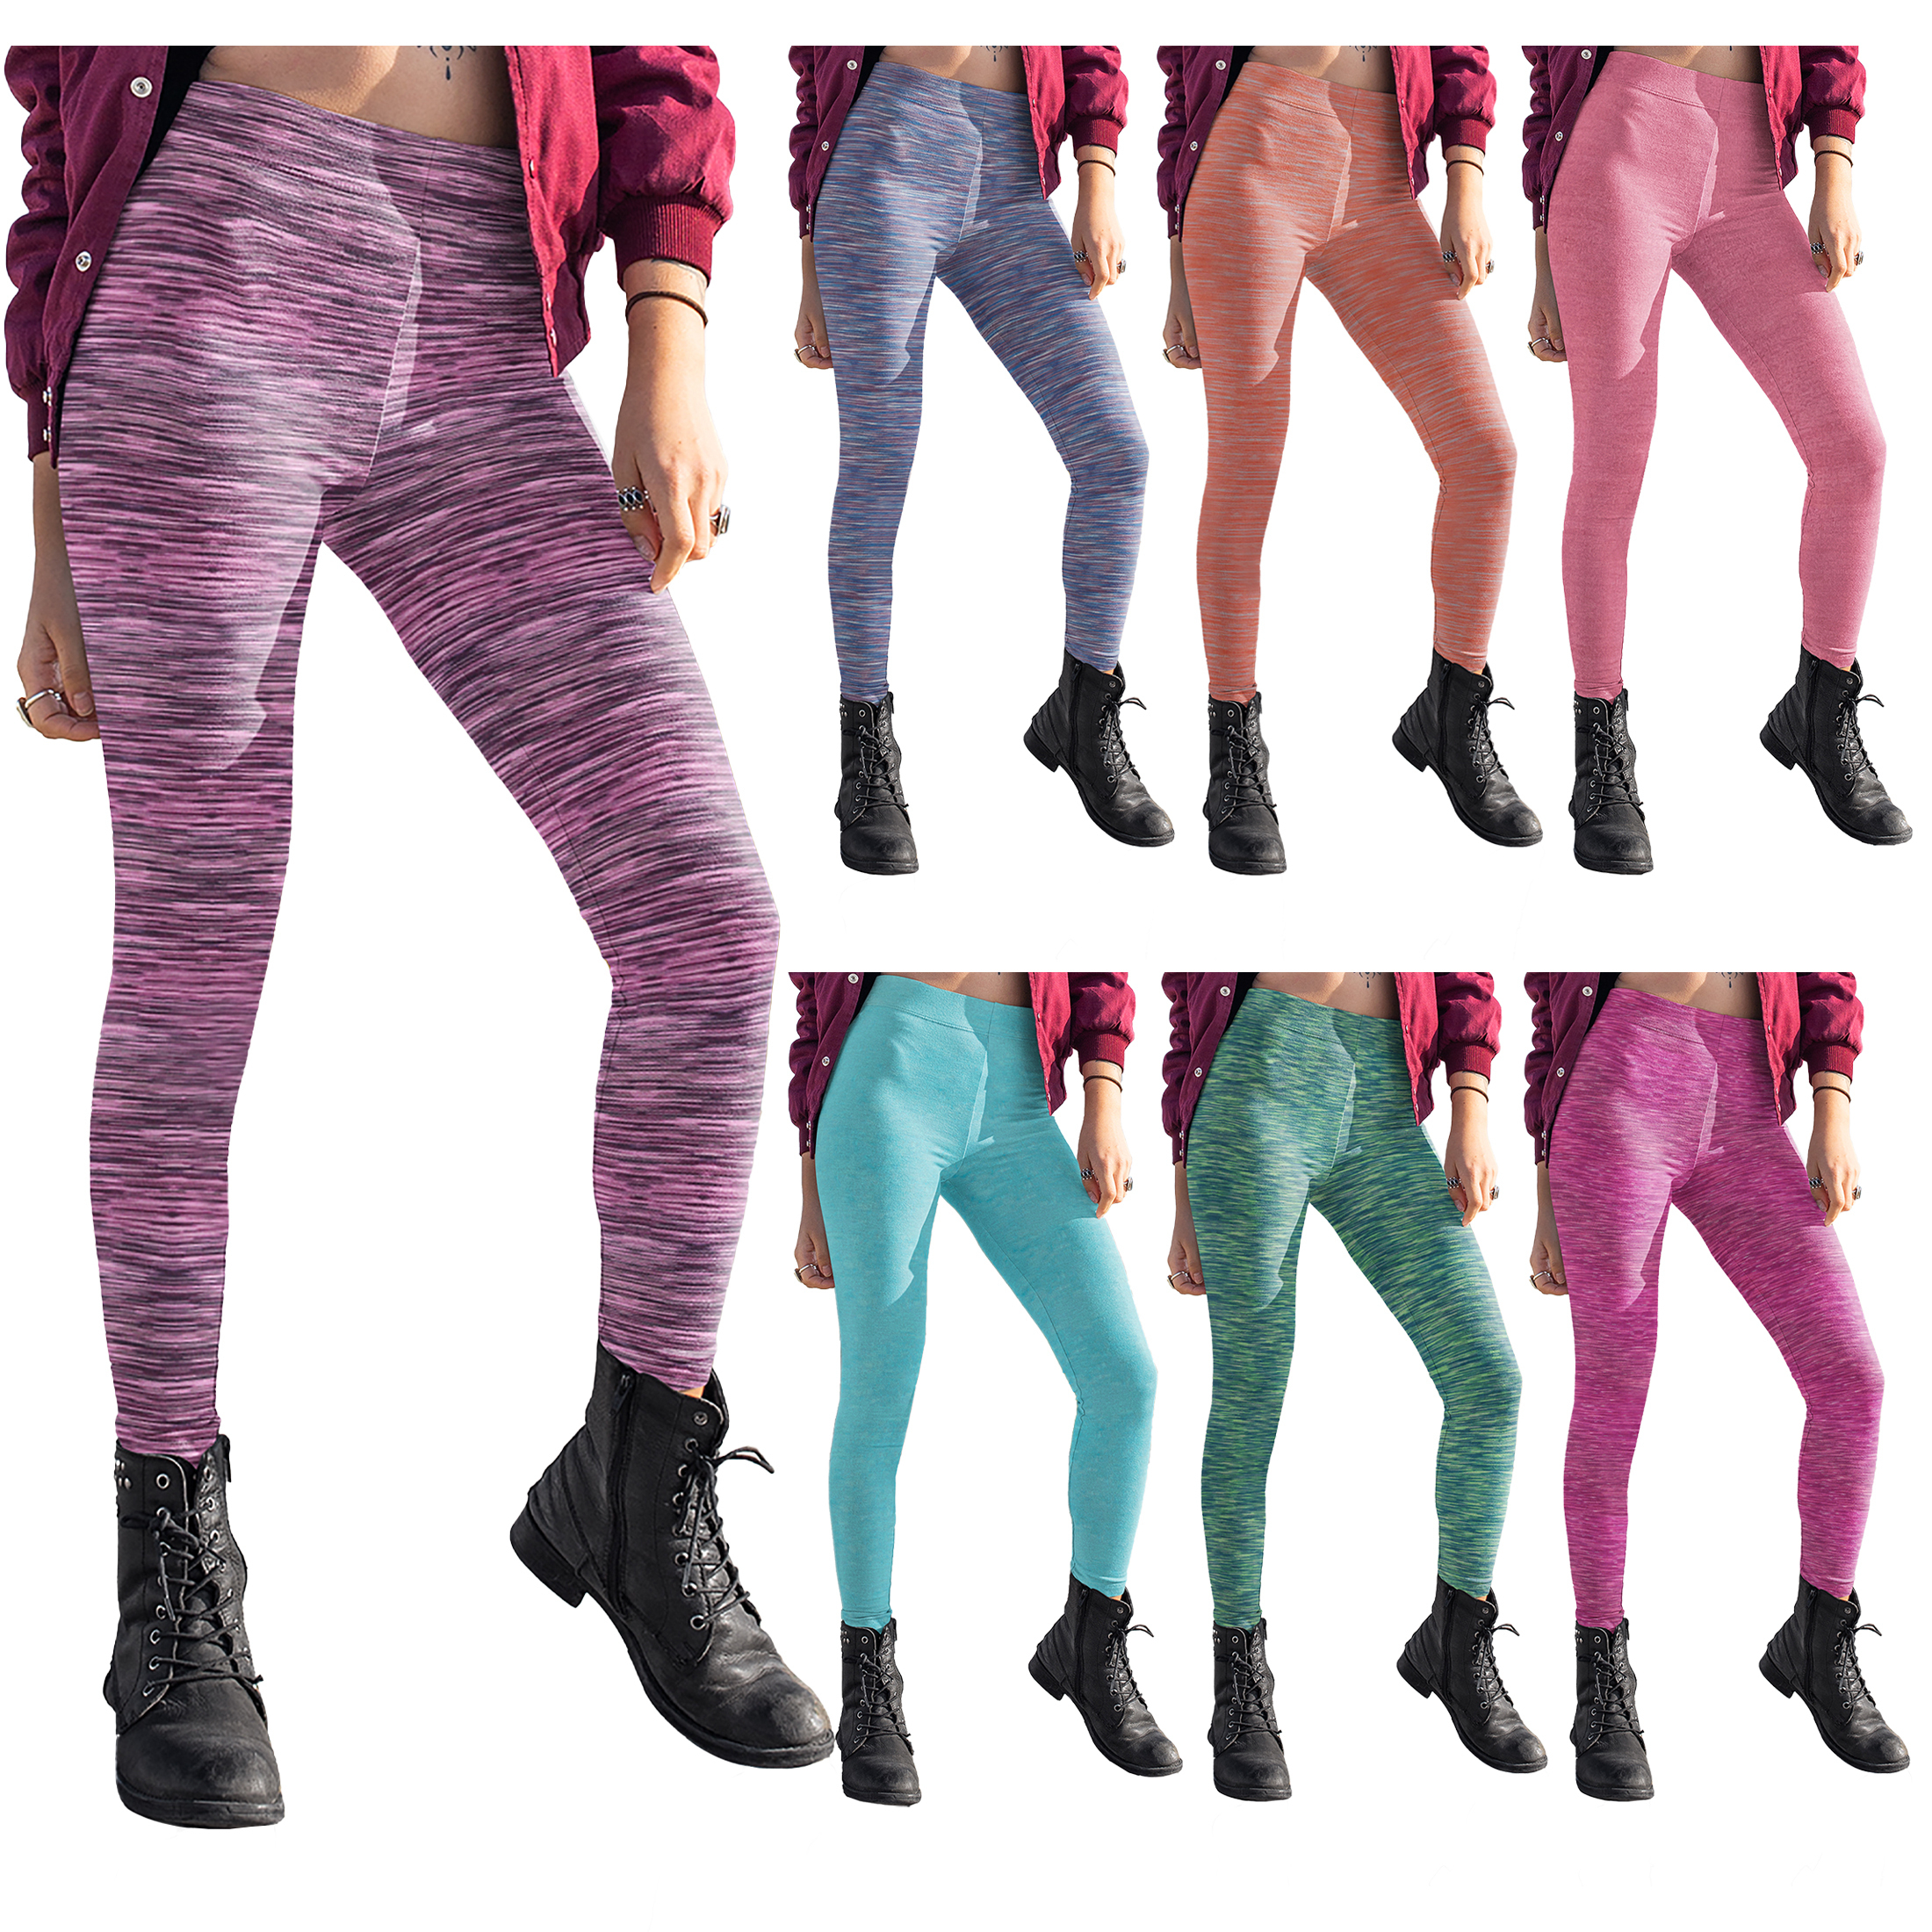 2-Pack: Women's Space Dye Seamless Leggings - X-Large